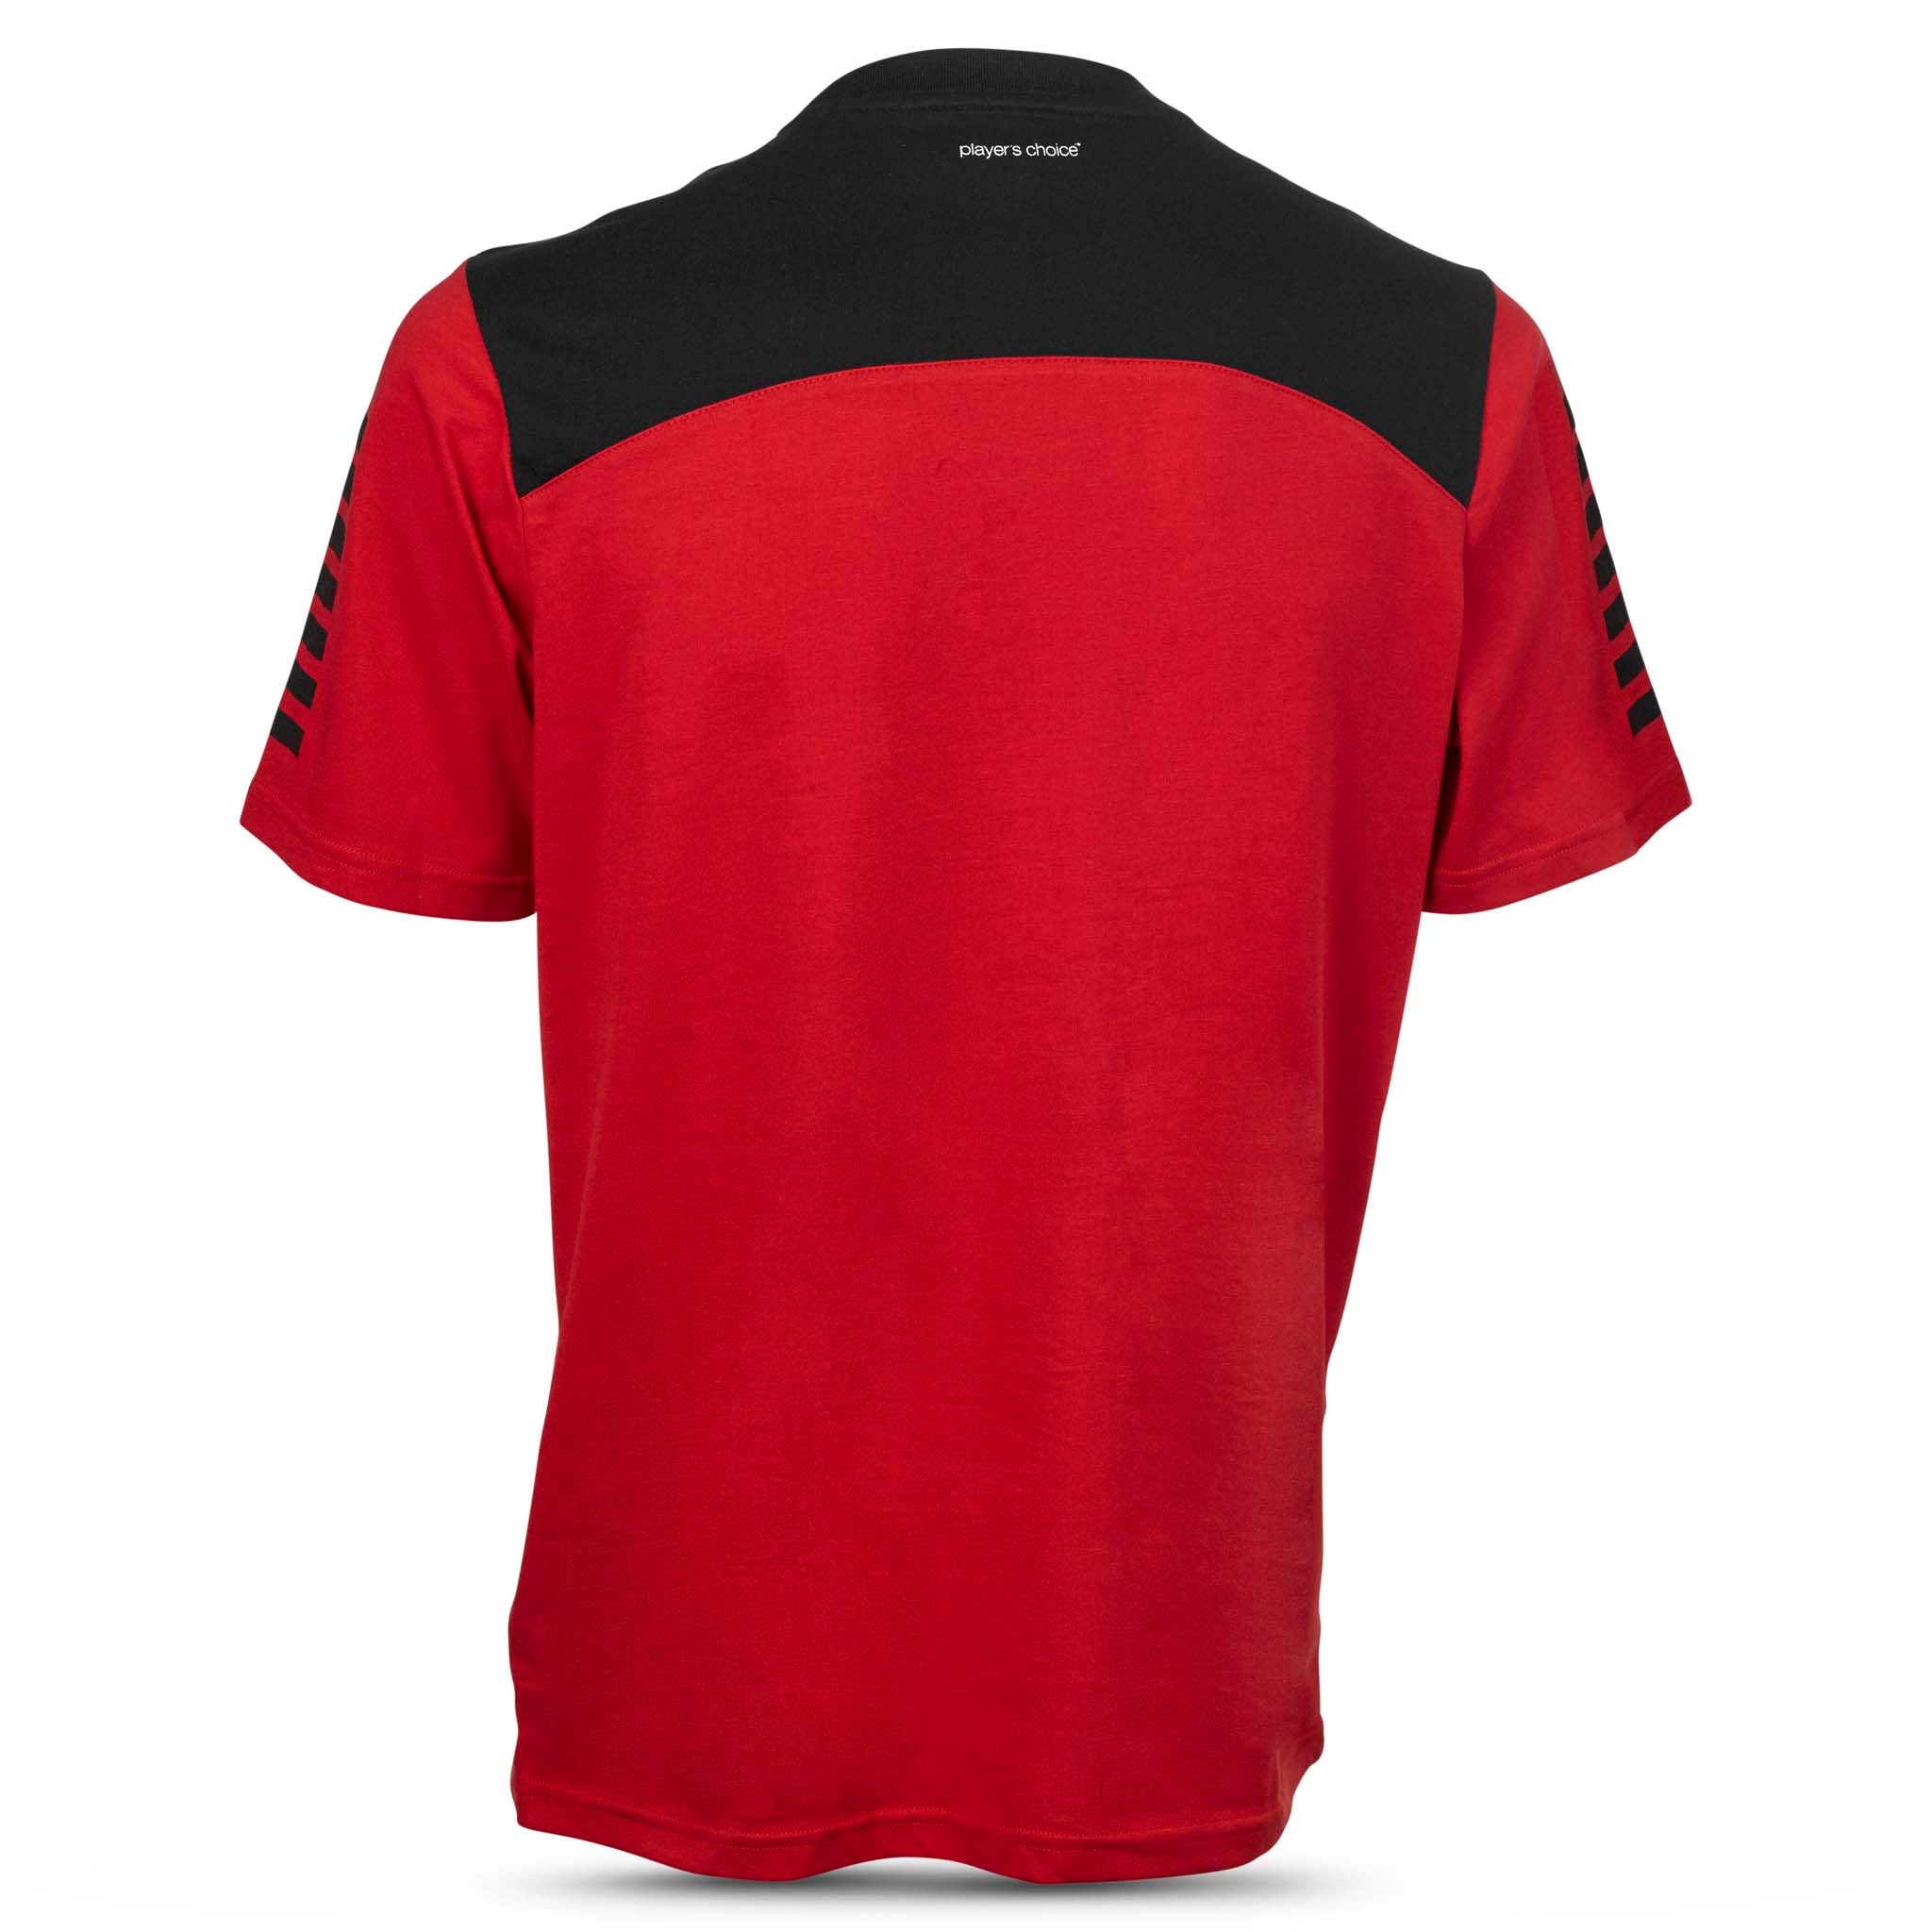 Oxford T-shirt #färg_röd/svart #färg_röd/svart